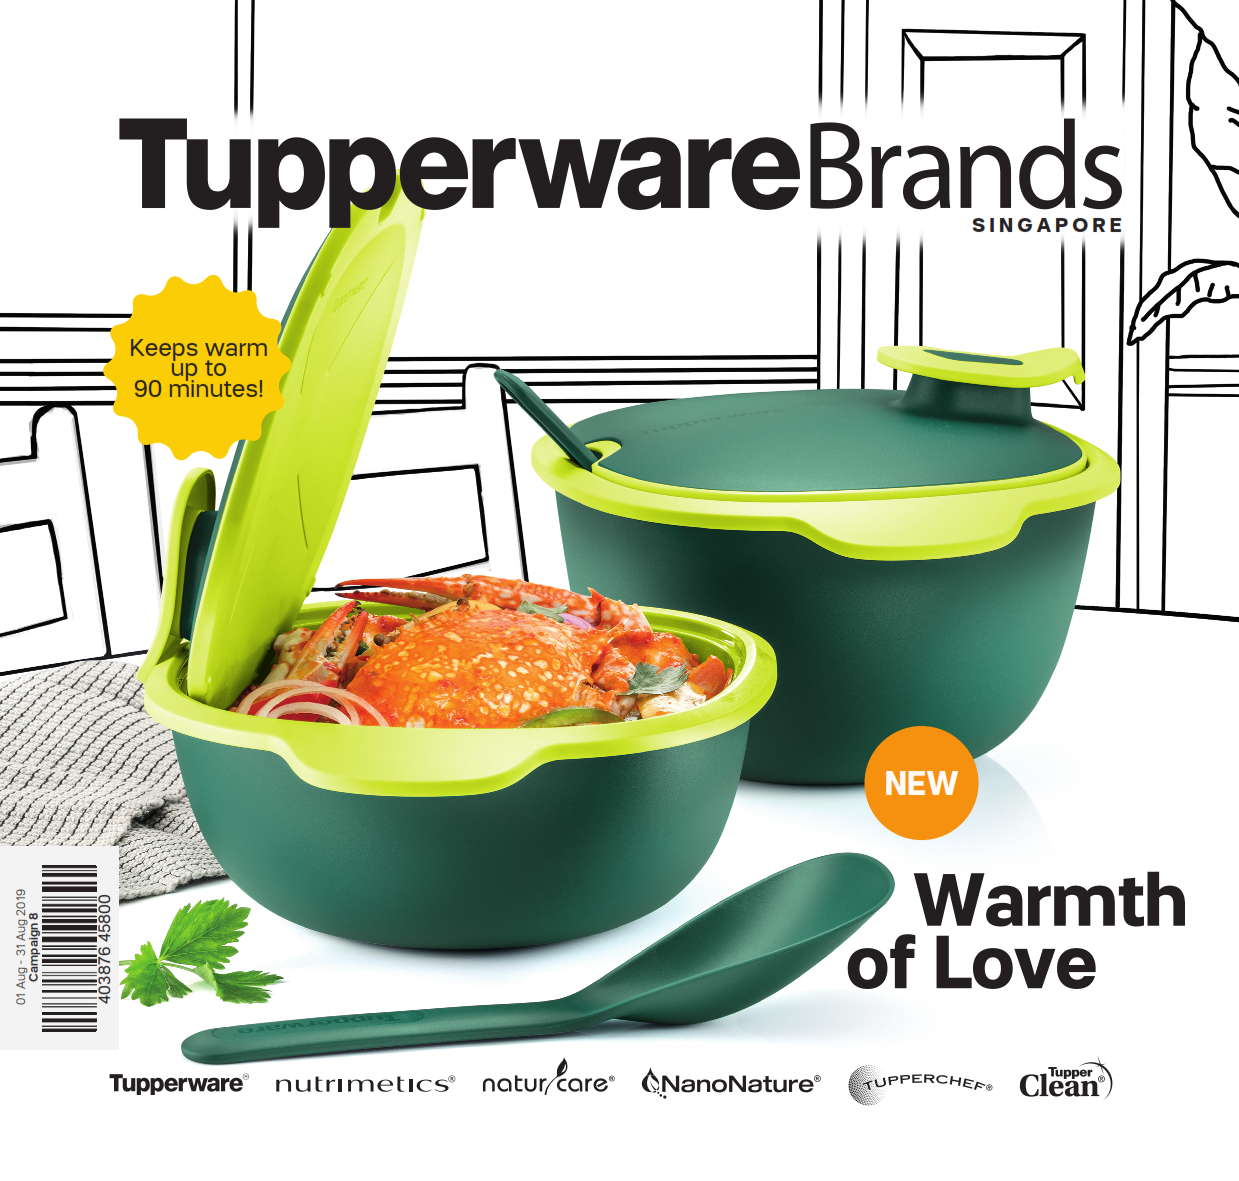 https://tupperware.sh.sg/wp-content/uploads/2019/08/Cat_8_2019__Tupperware_Brands_Singapore_001.png